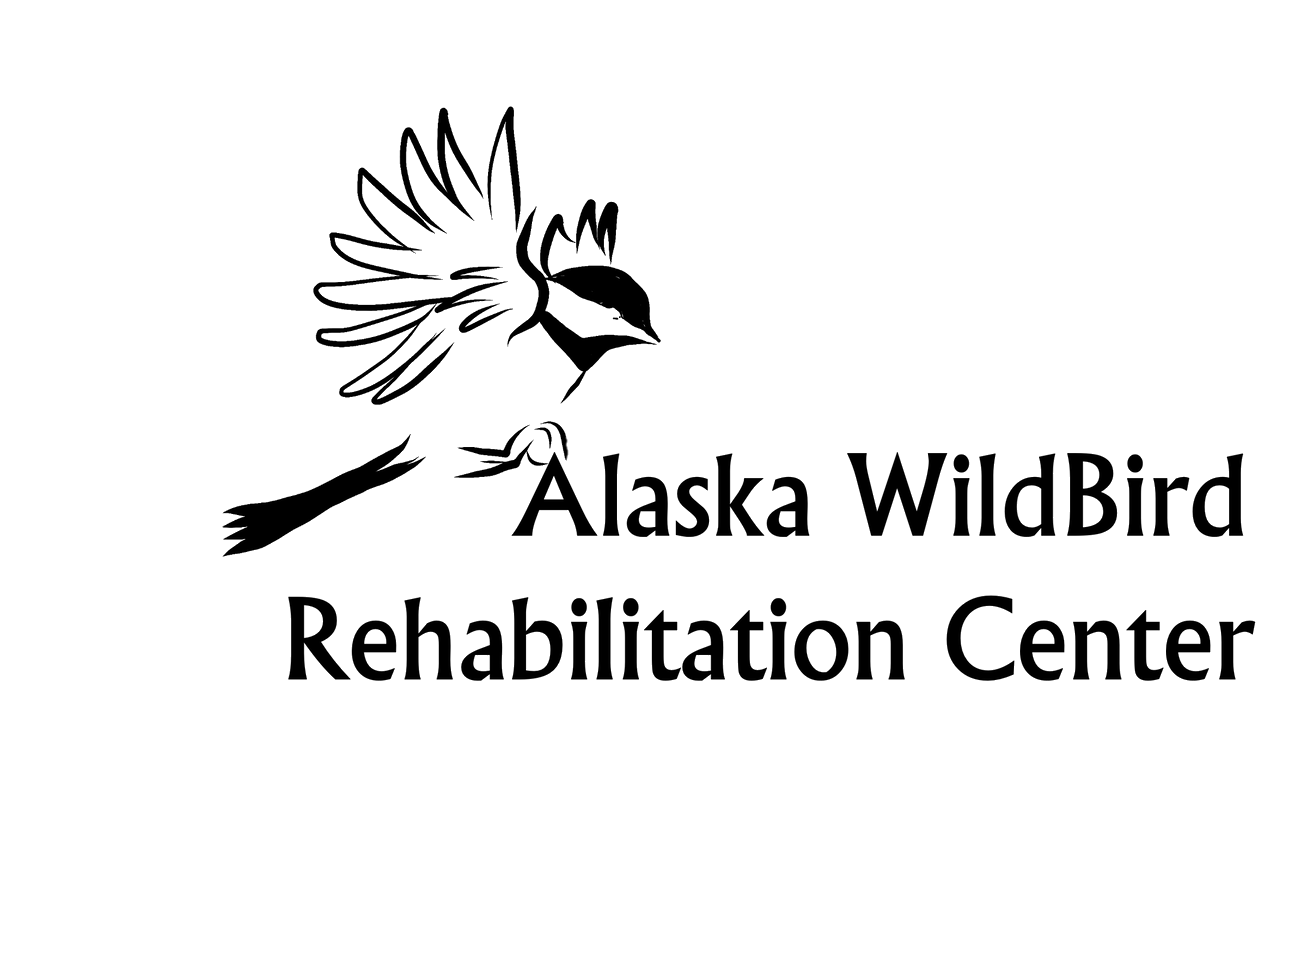 Alaska WildBird Rehabilitation Center logo